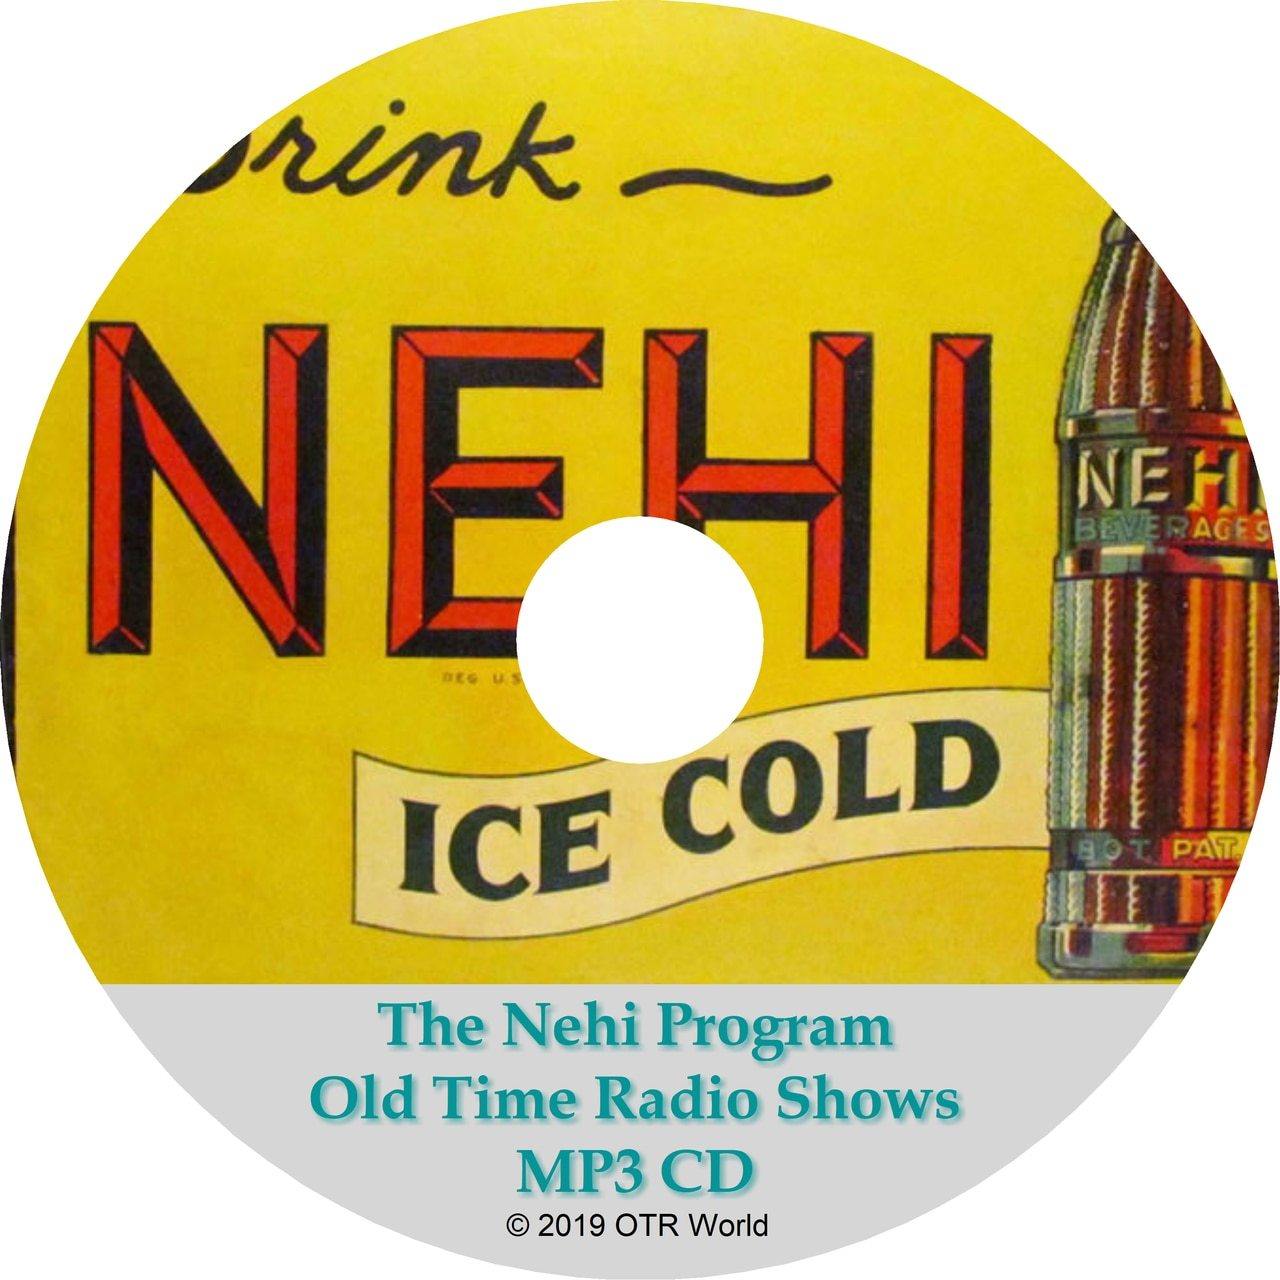 Nehi Program Old Time Radio Shows 11 Episodes On MP3 CD-R OTR - OTR World